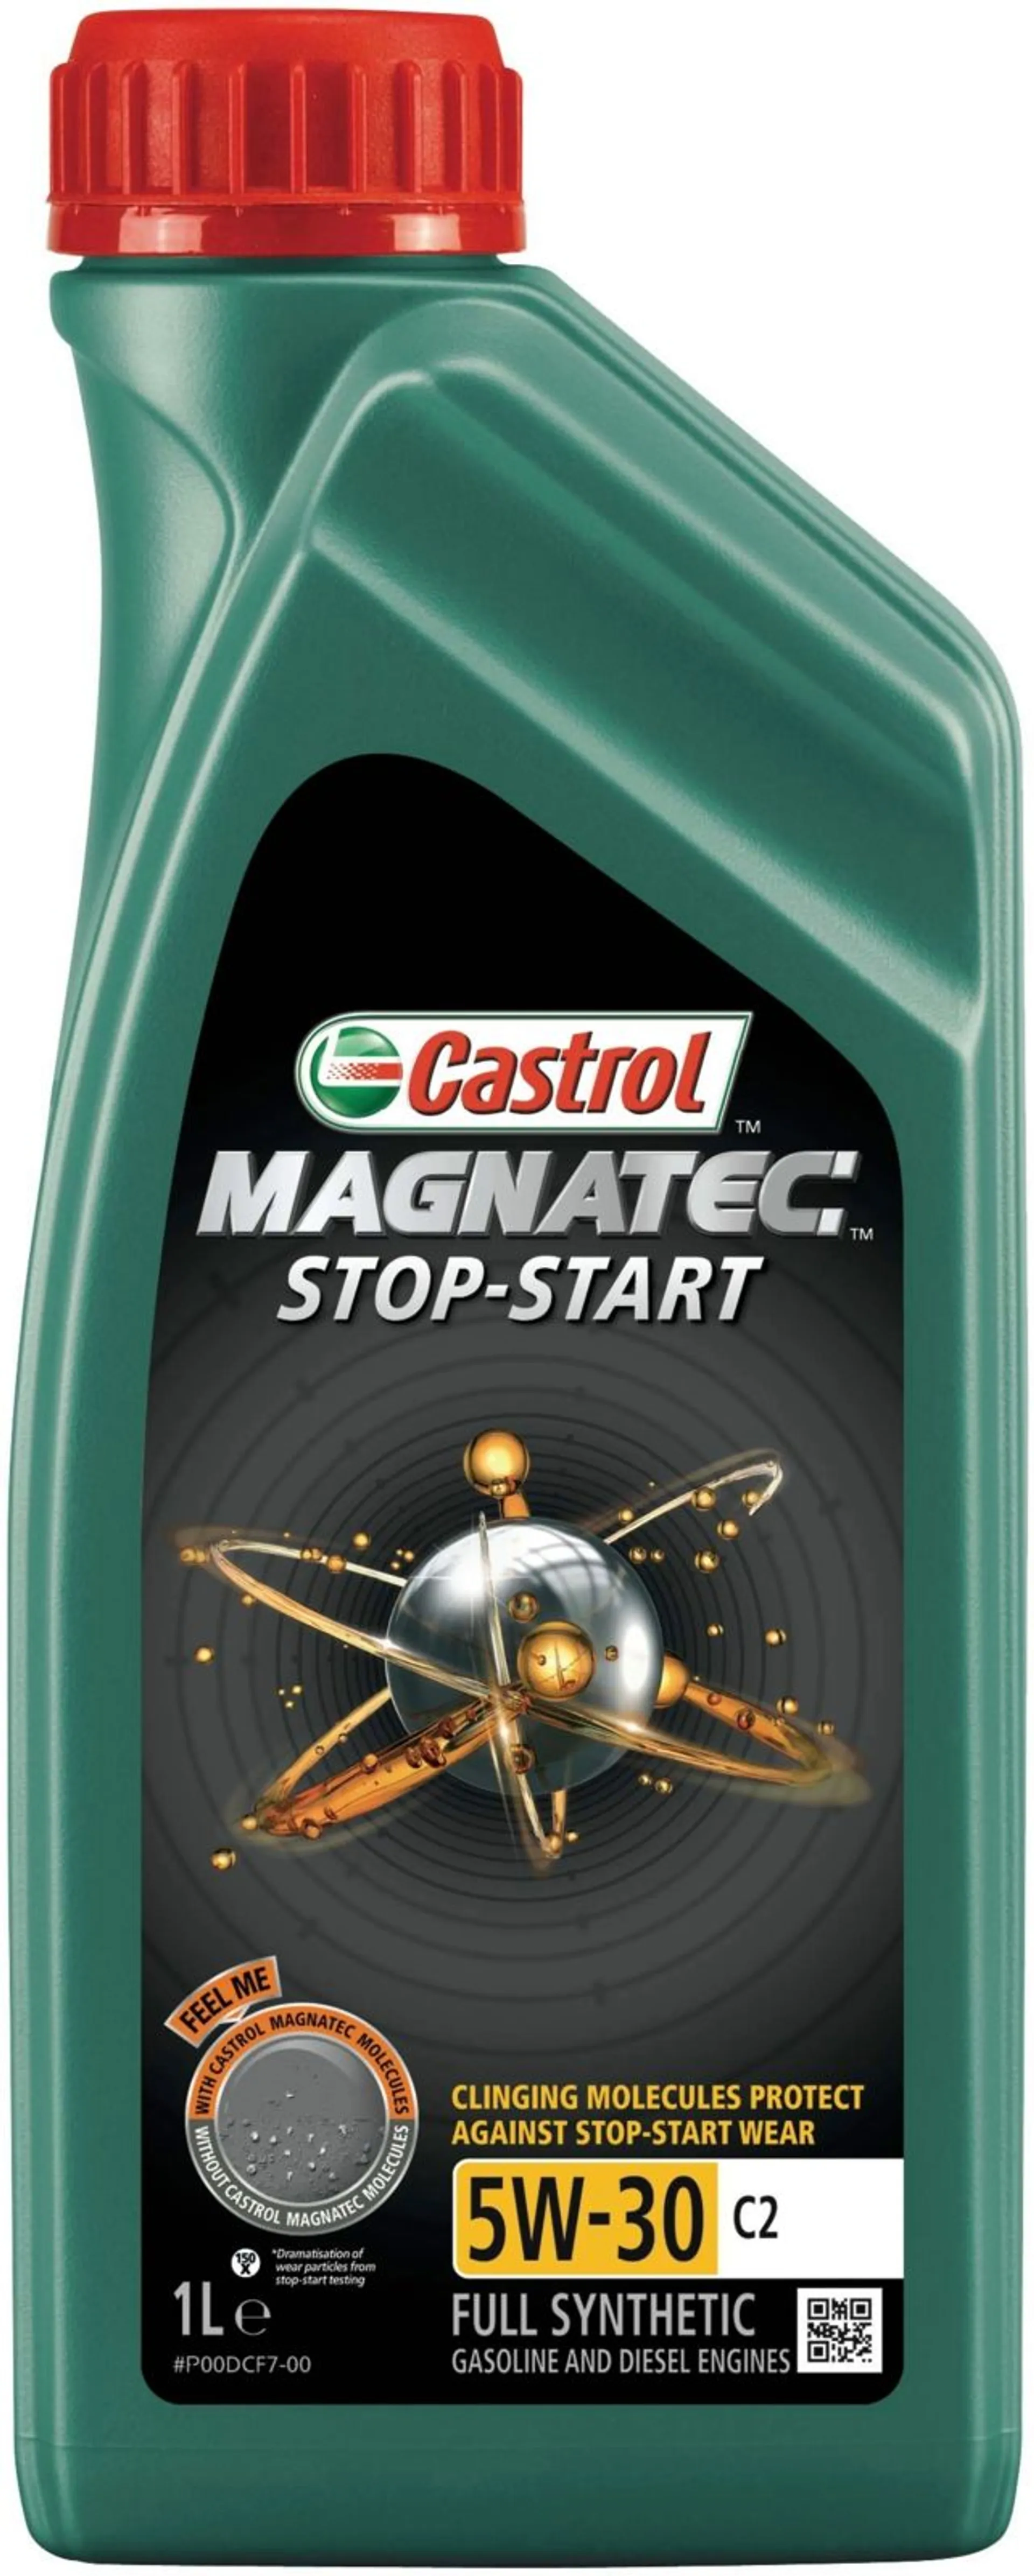 Castrol Magnatec Stop-Start 5W-30 C2 moottoriöljy 1L